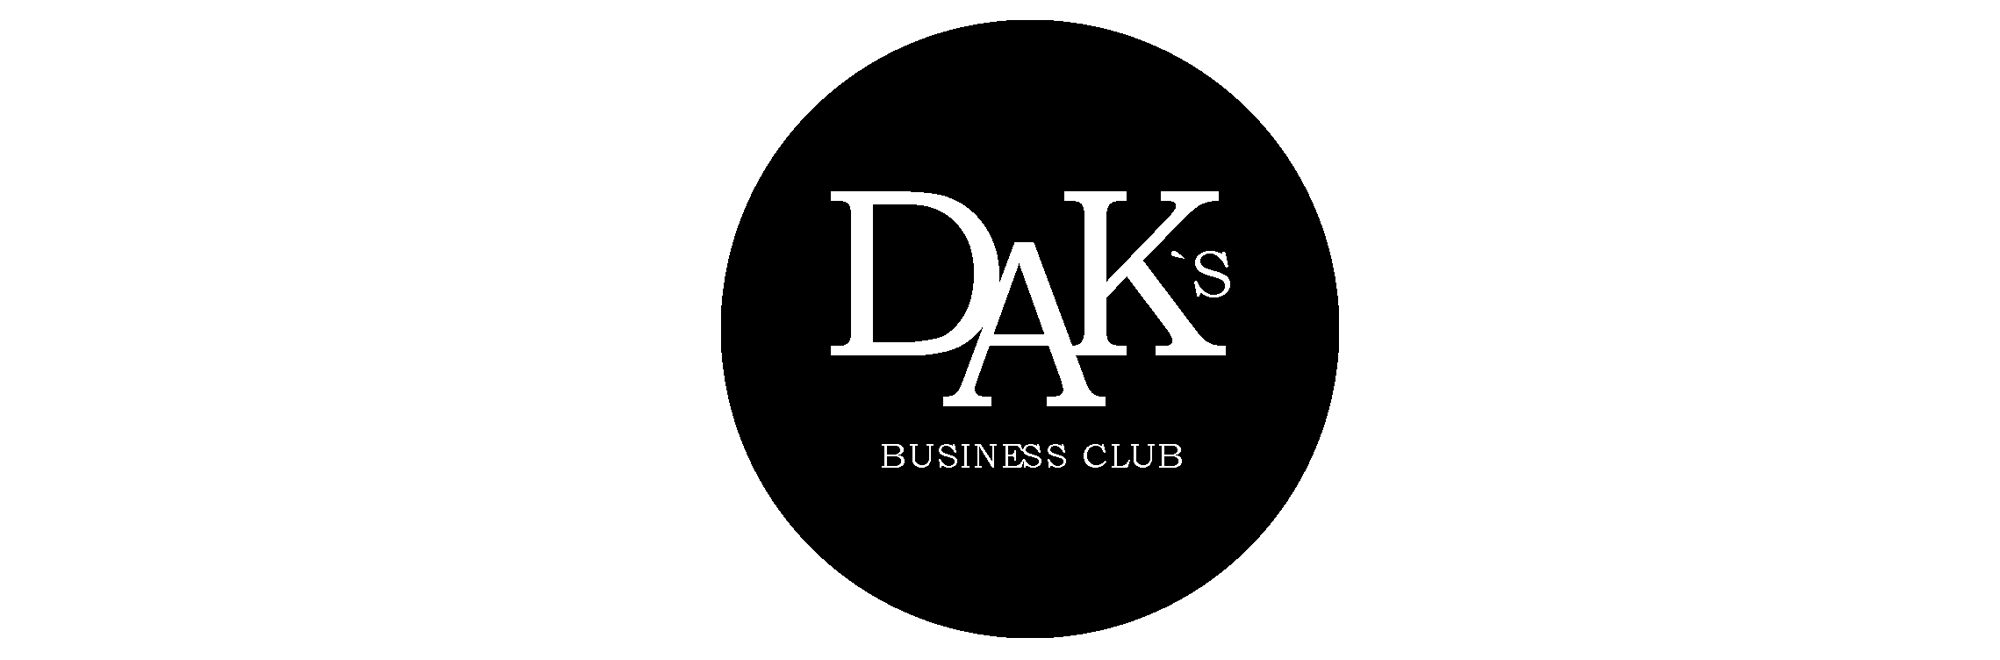 DAK`s Business Club